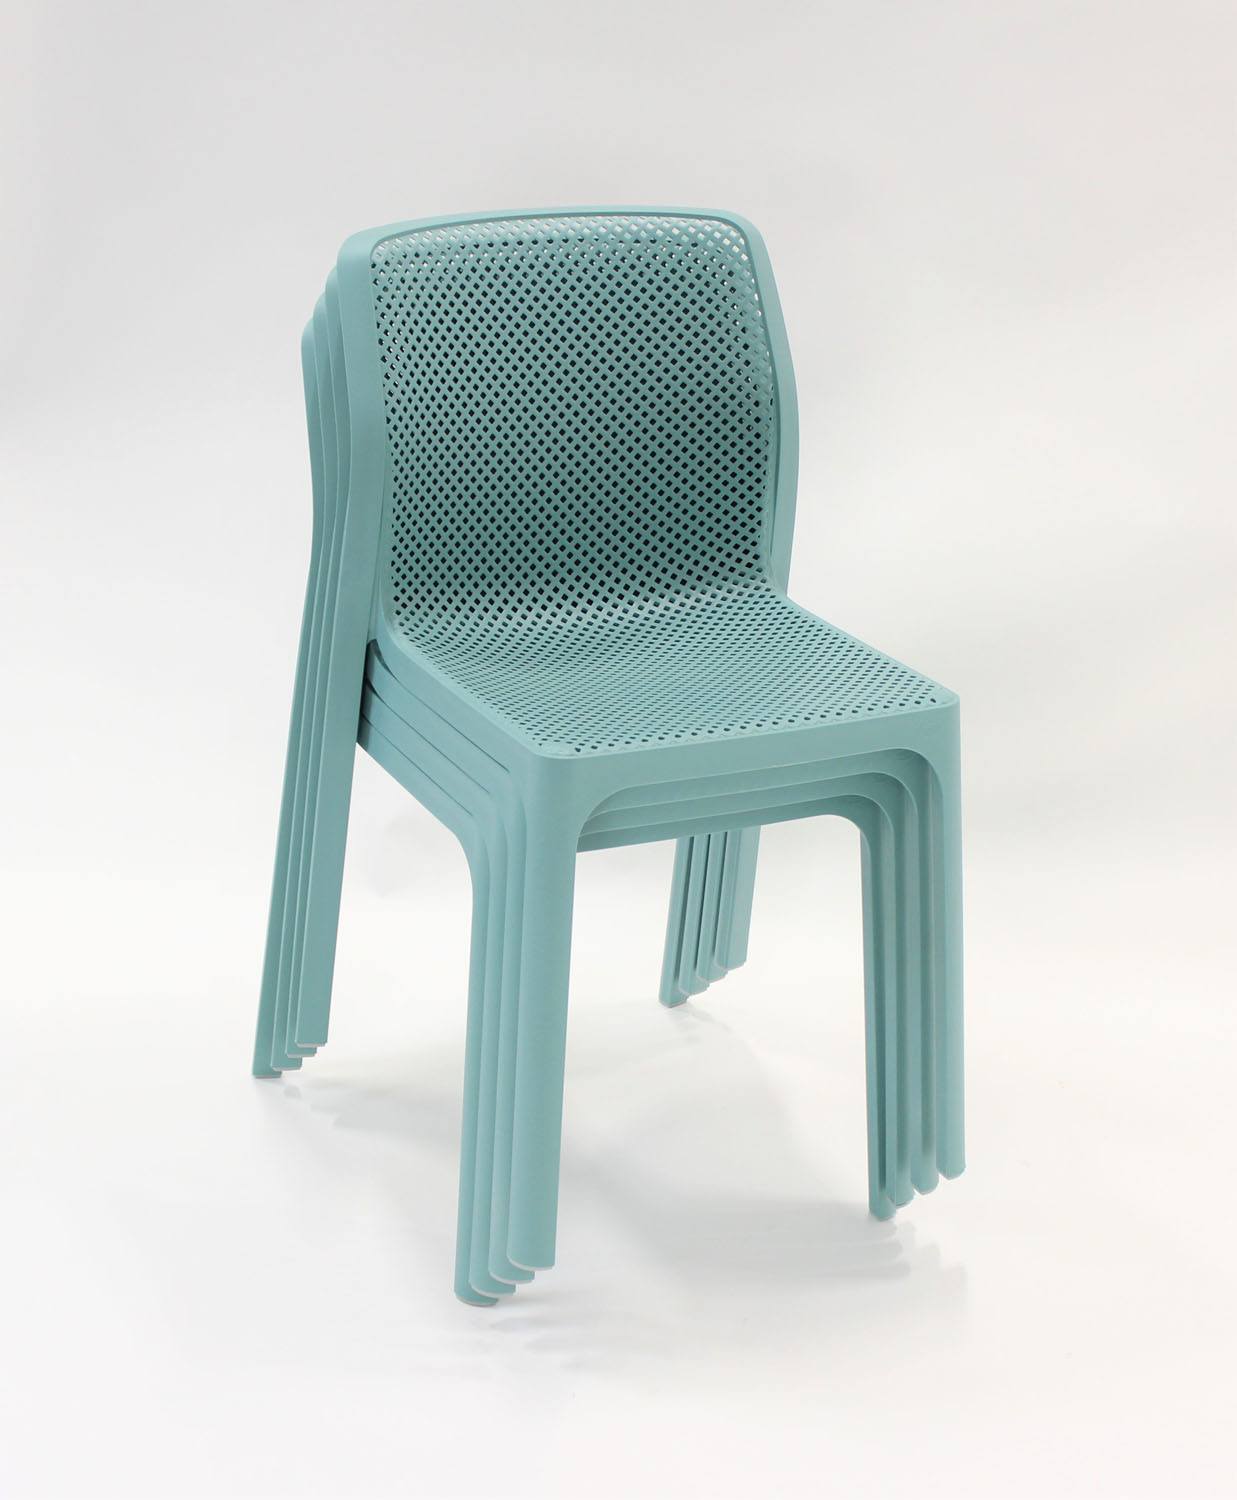 Nardi Bit Outdoor Dining  Chair - Light Blue (Set of 4)